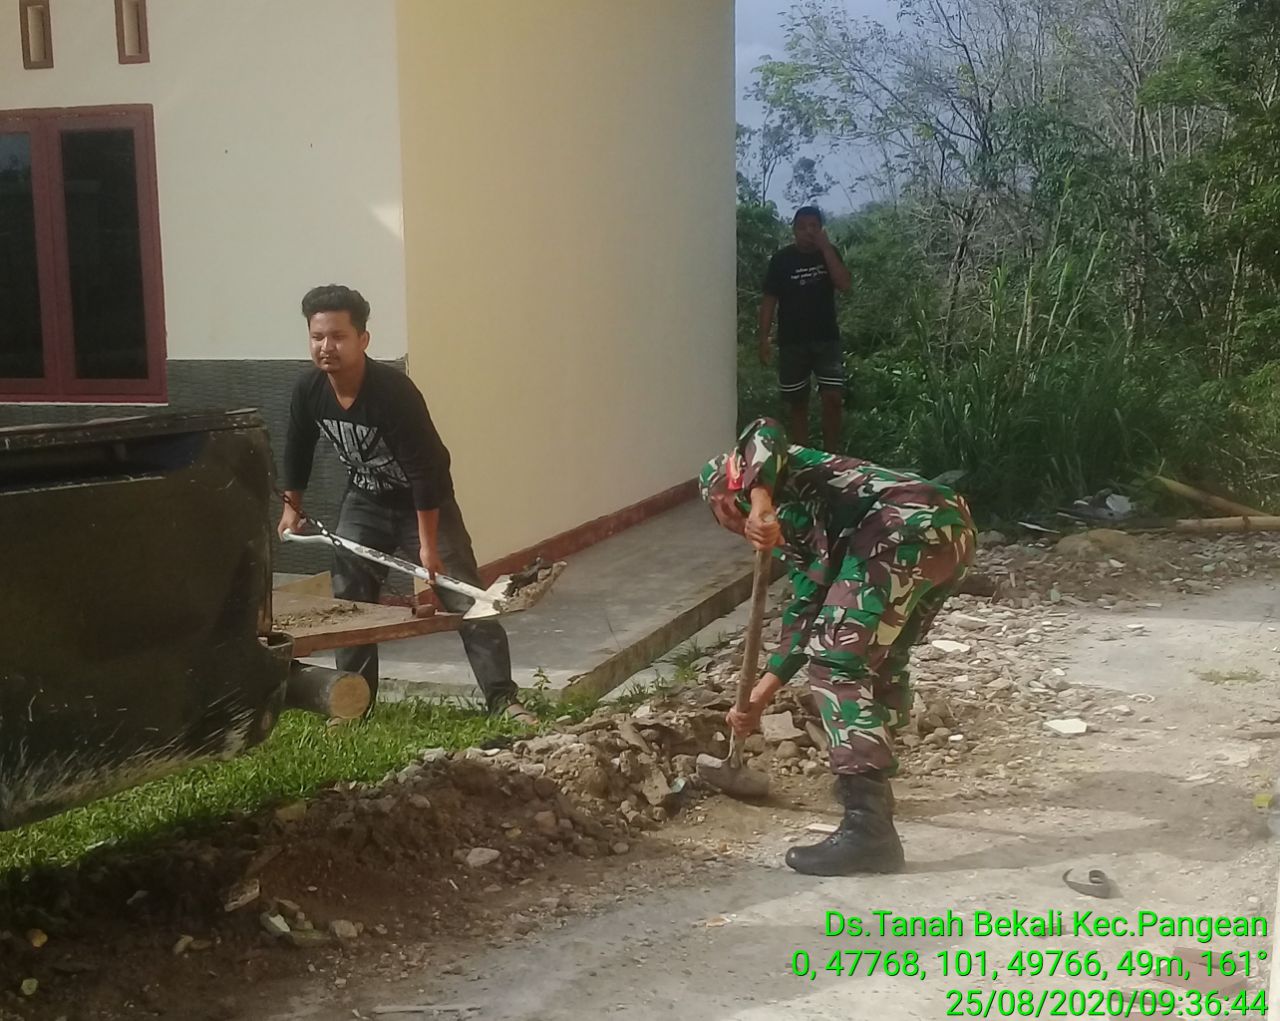 Serma Mulyadi Gotong Royong Bersama Murid-Murid Dan Majelis Guru Membersihkan Puing-Puing Bangunan Sekolah